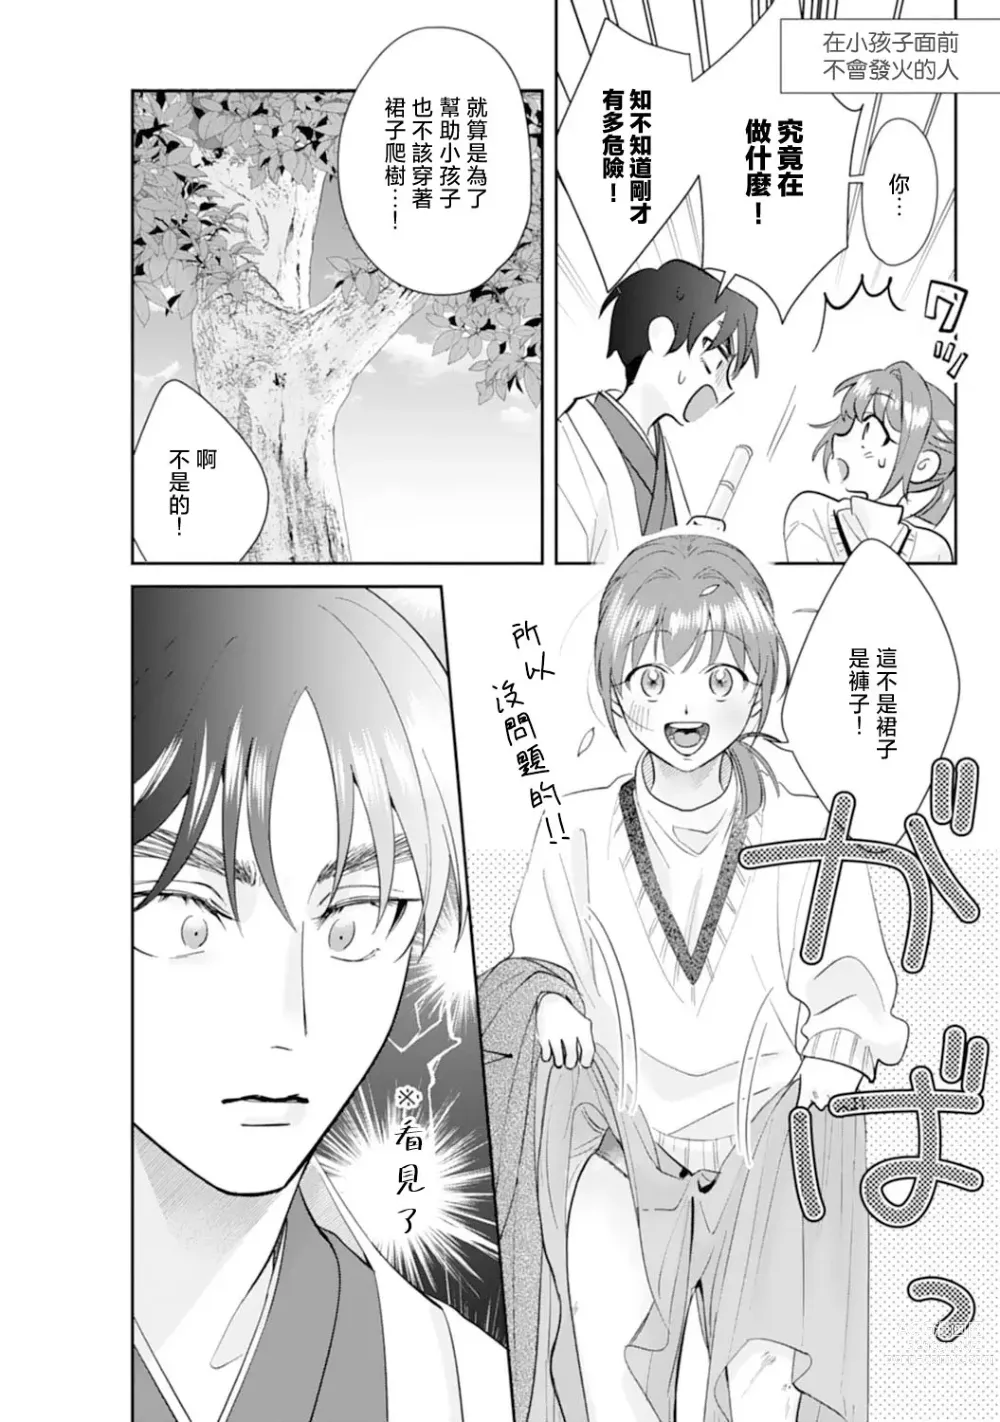 Page 52 of manga 浅叶老师专一的纯爱 1-2